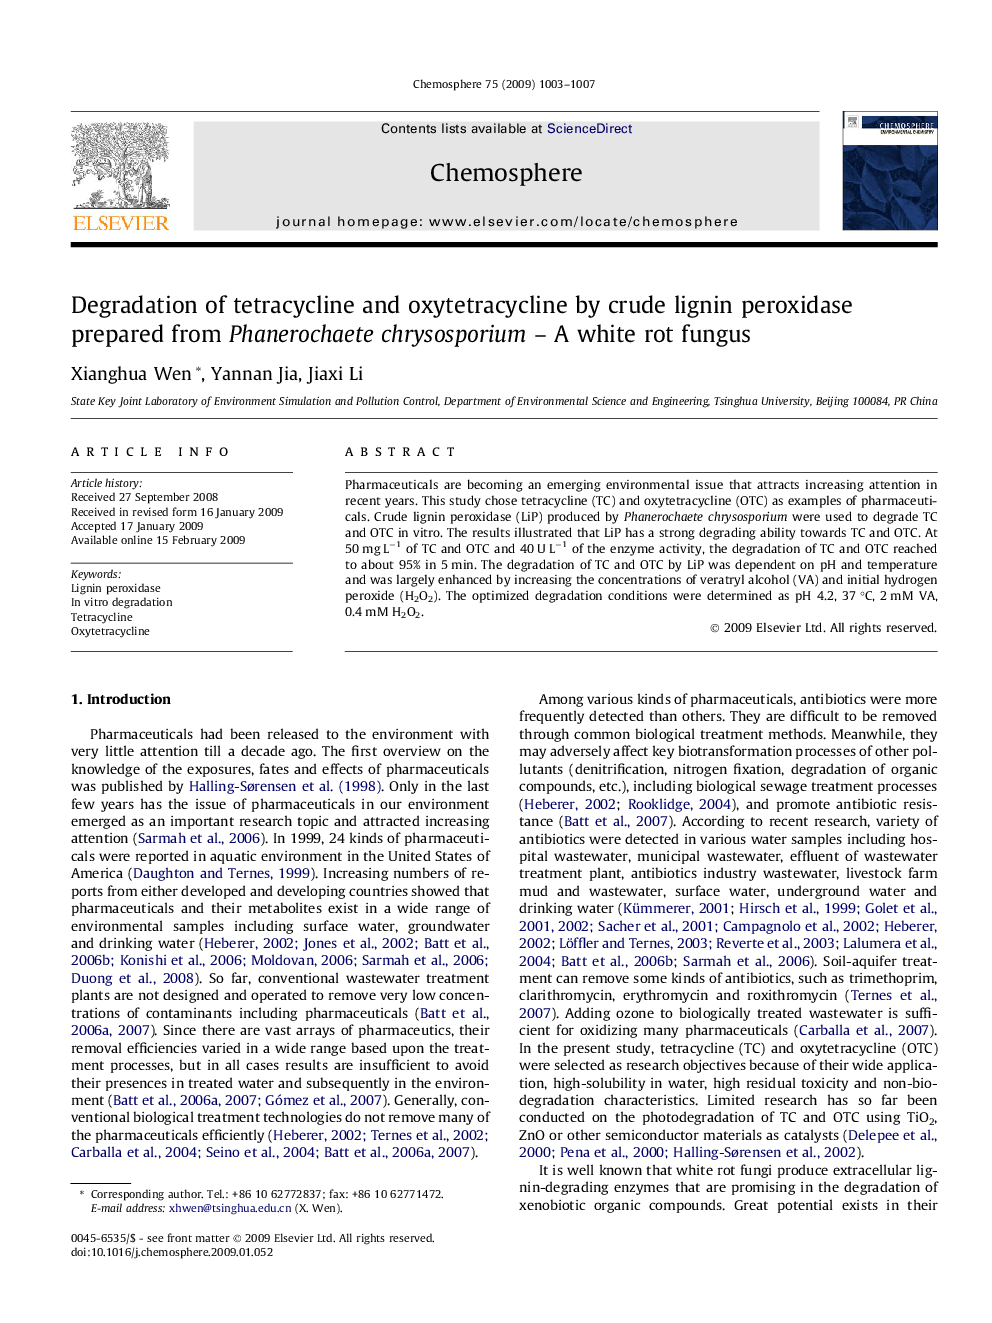 Degradation of tetracycline and oxytetracycline by crude lignin peroxidase prepared from Phanerochaete chrysosporium – A white rot fungus